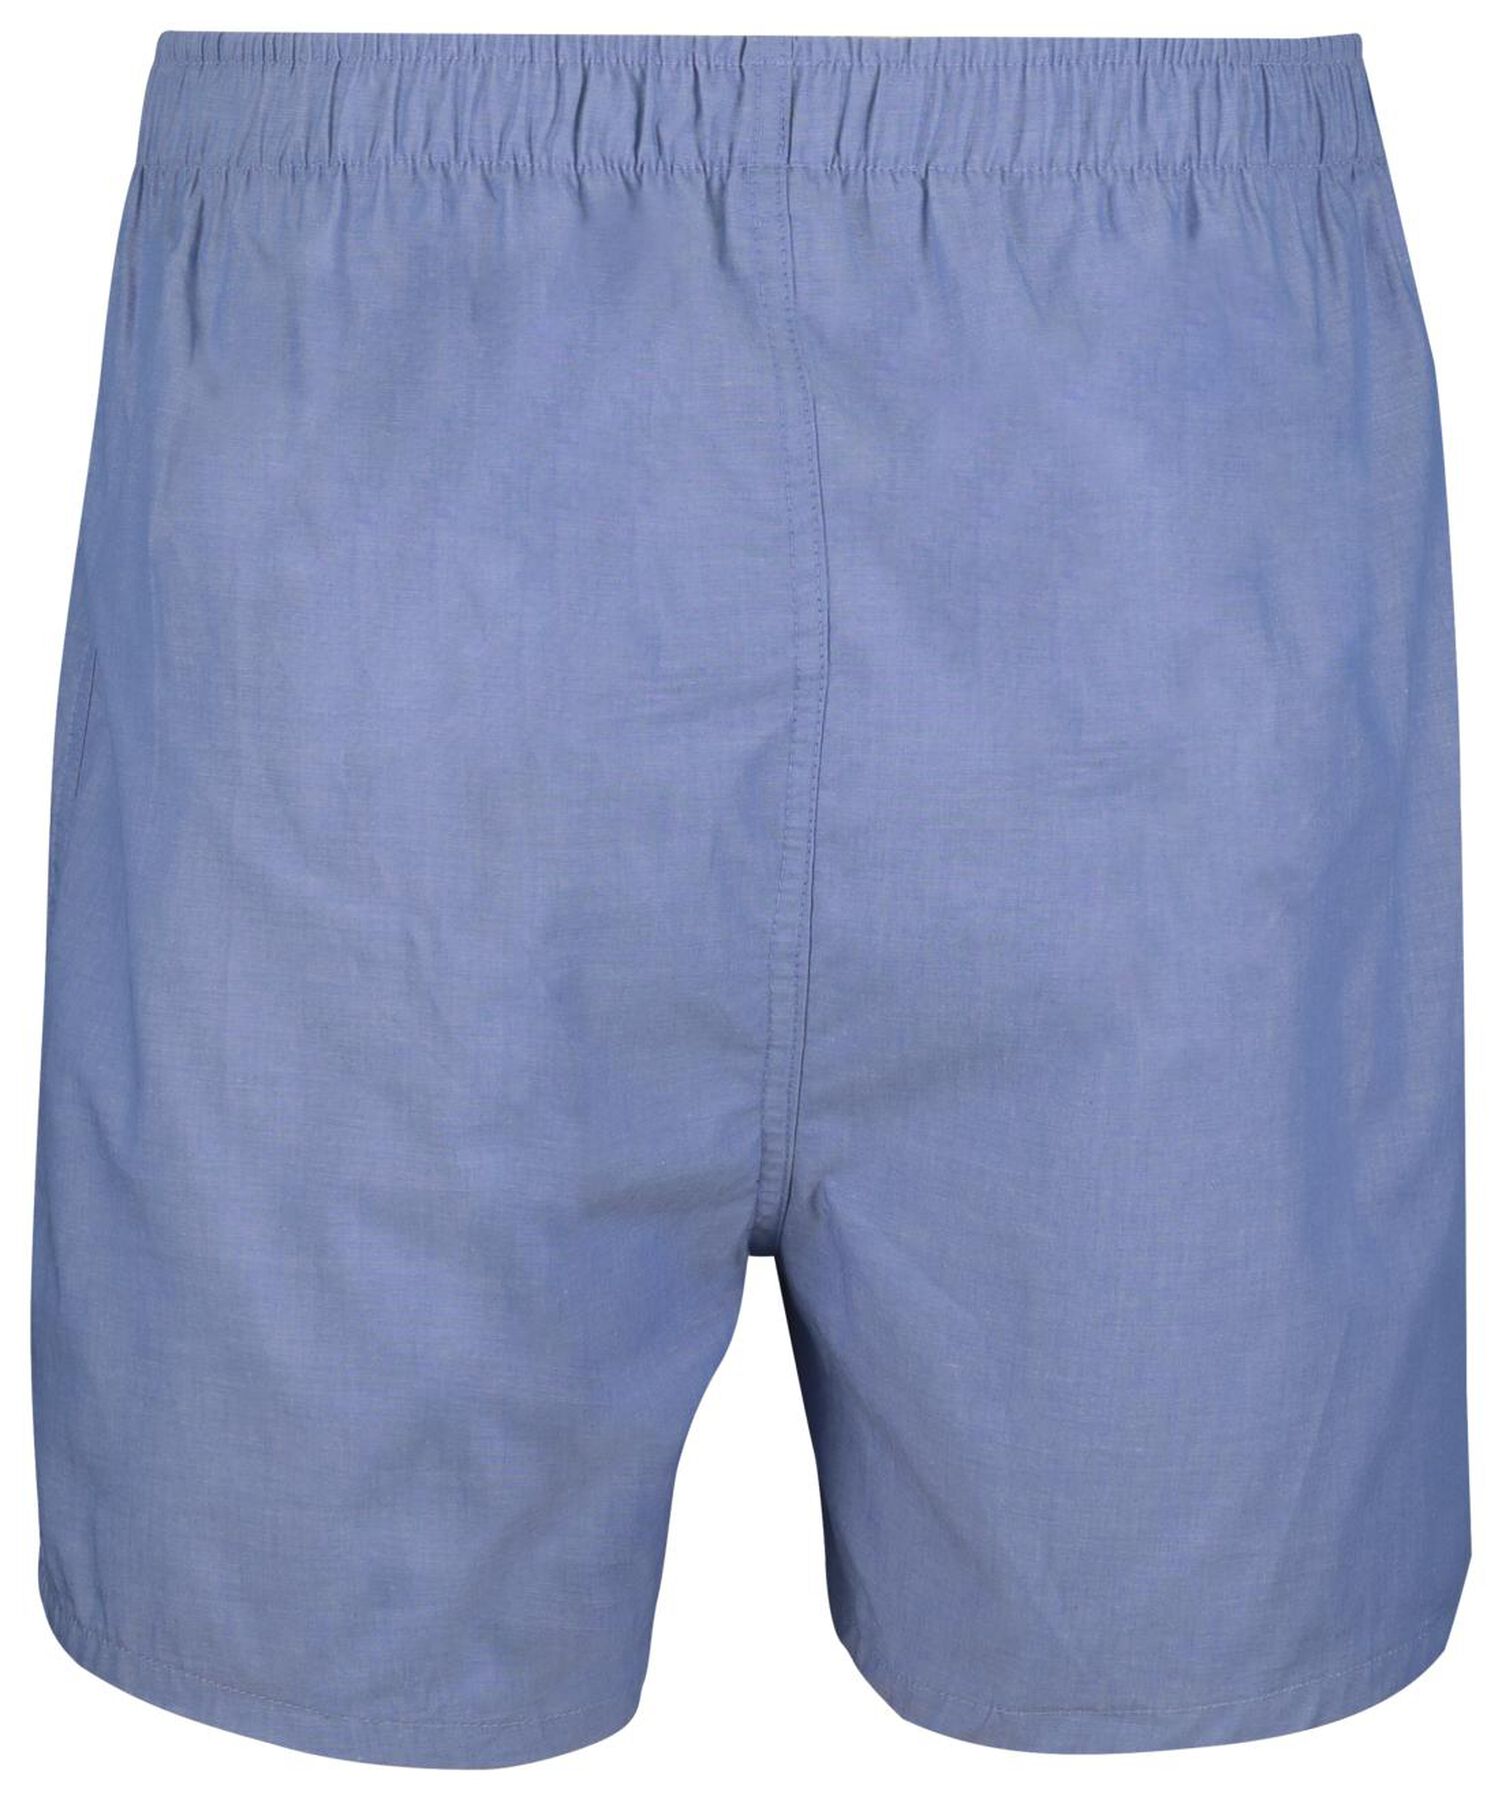 men's boxer shorts woven light blue - HEMA